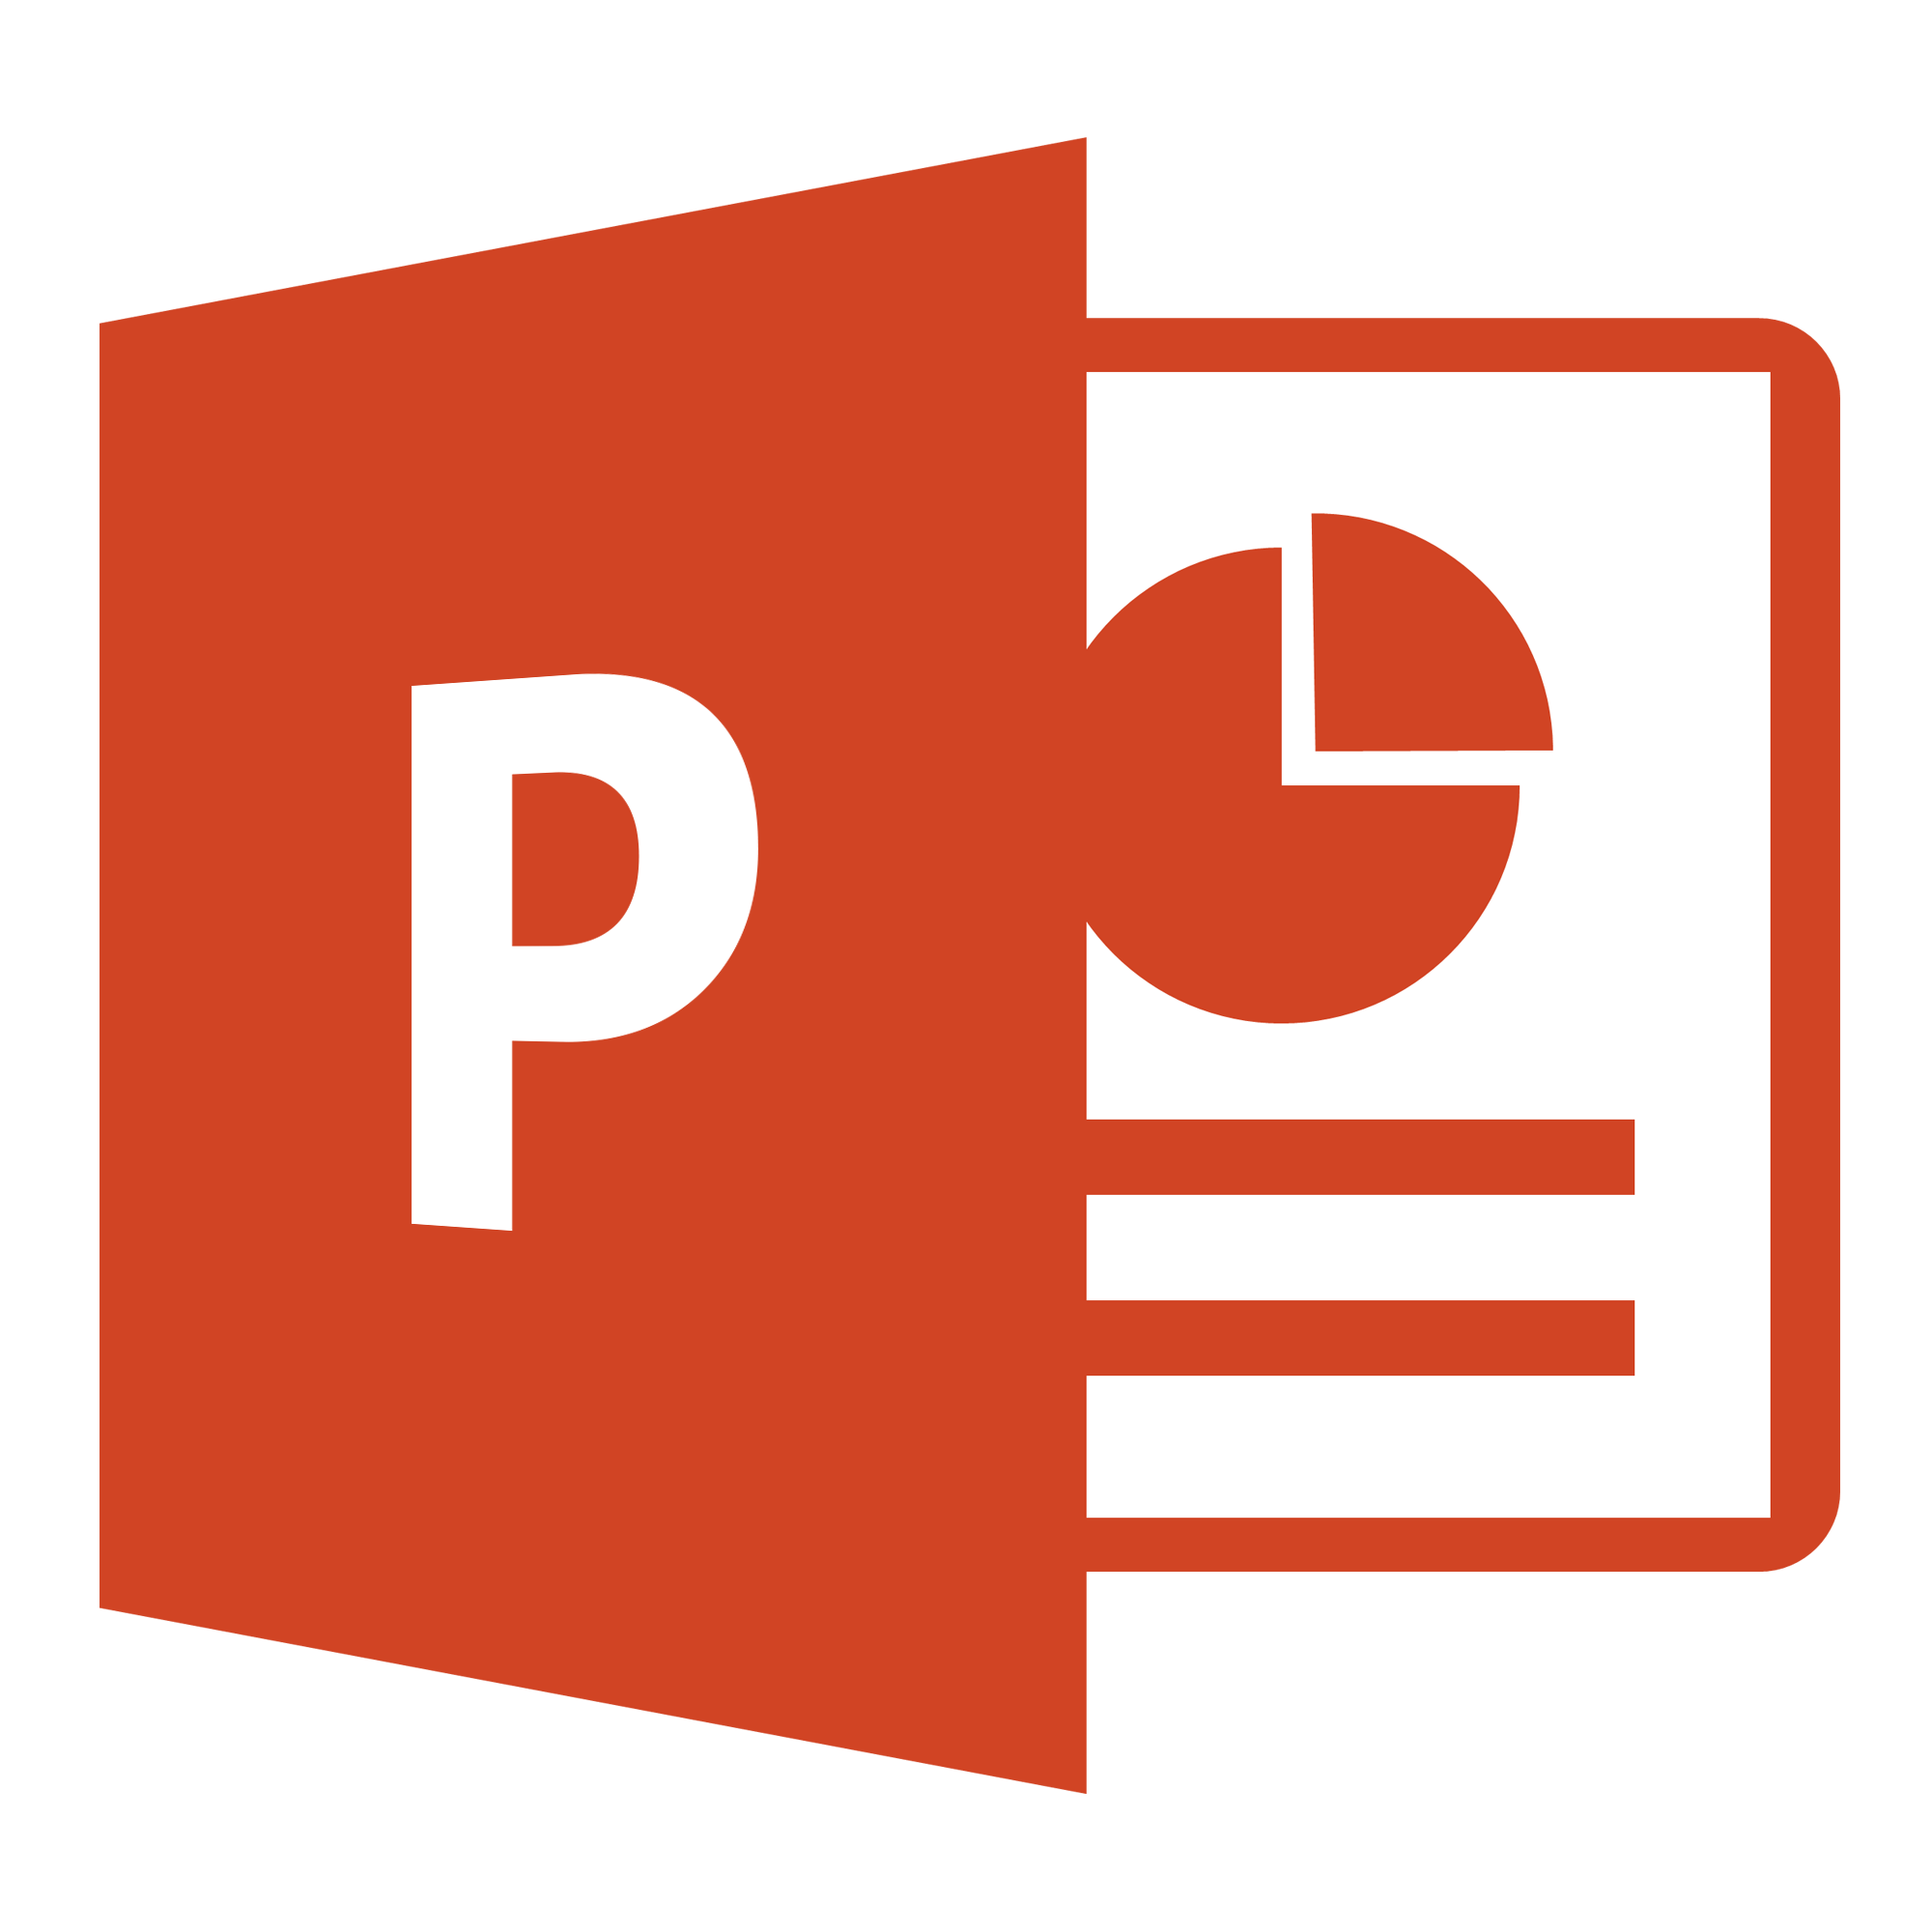 Microsoft Powerpoint icon